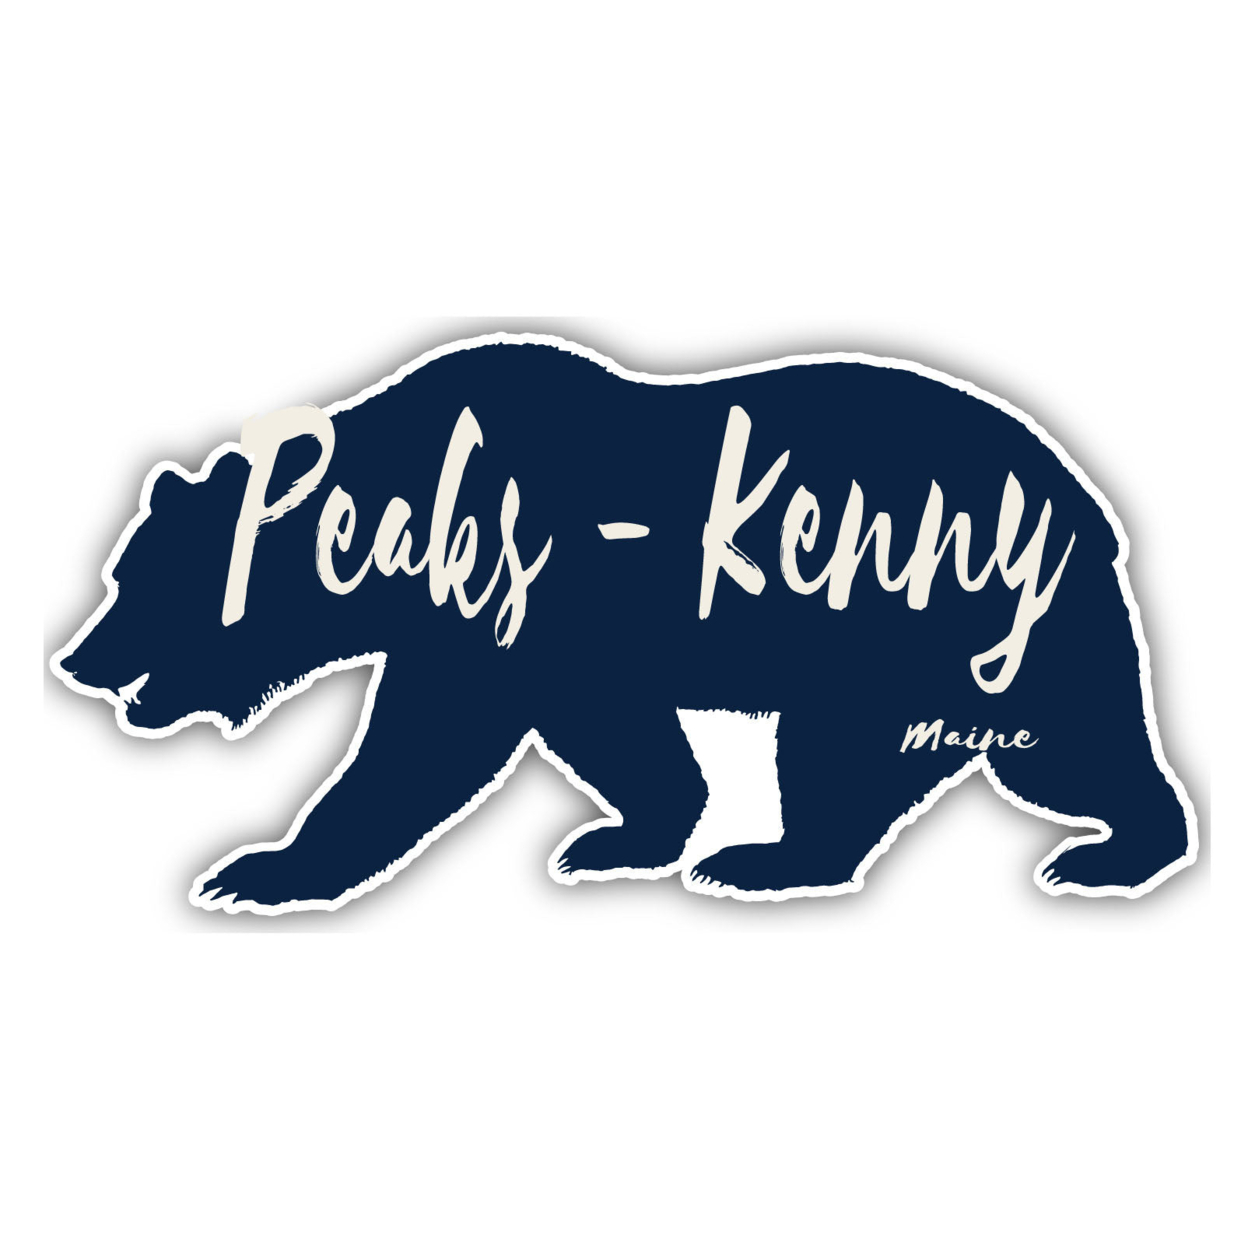 Peaks - Kenny Maine Souvenir Decorative Stickers (Choose Theme And Size) - Single Unit, 2-Inch, Bear